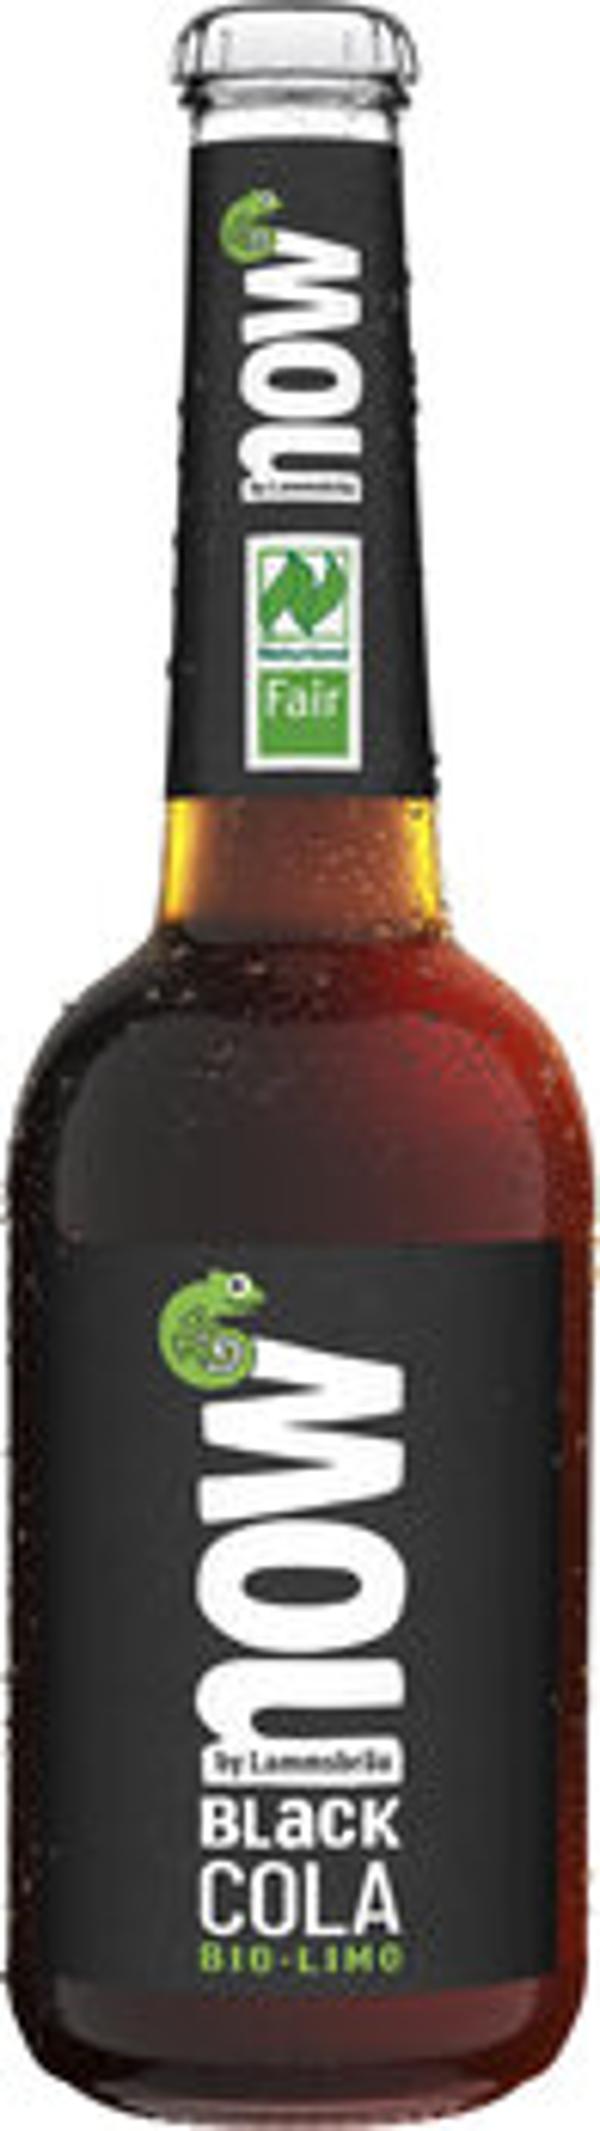 Produktfoto zu NOW Black Cola, 10x0,33 l